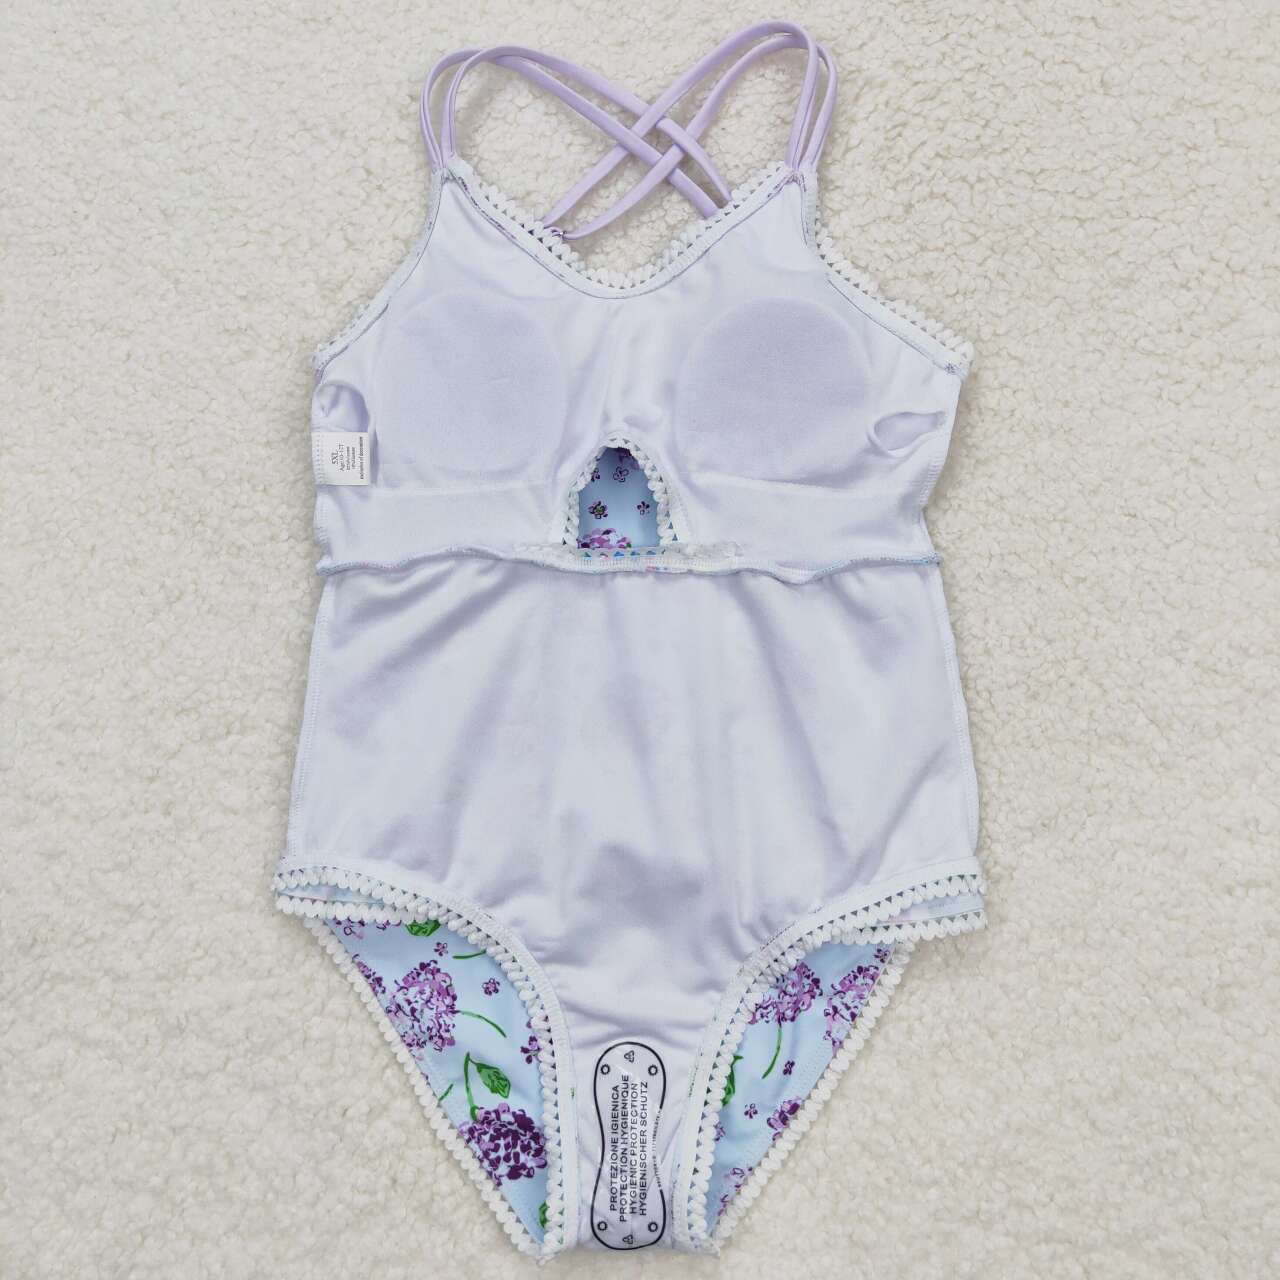 S0246 Purple floral lace teal halter one-piece swimsuit